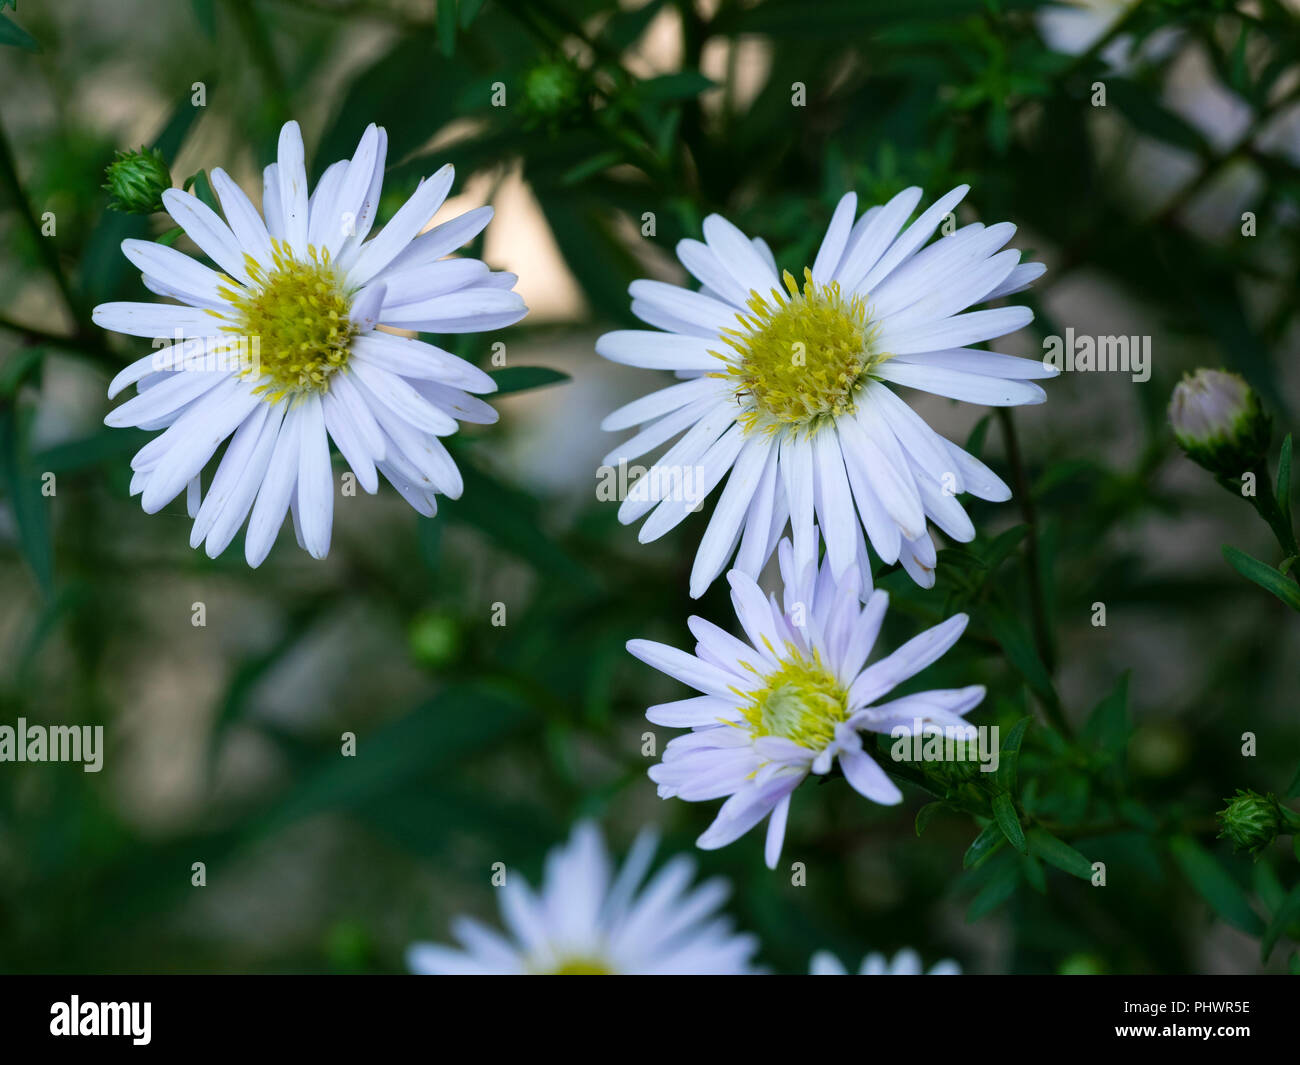 White, late summer daisy flowers of the hardy perennial Symphyotrichum pilosum var. pringlei 'Monte Cassino' Stock Photo